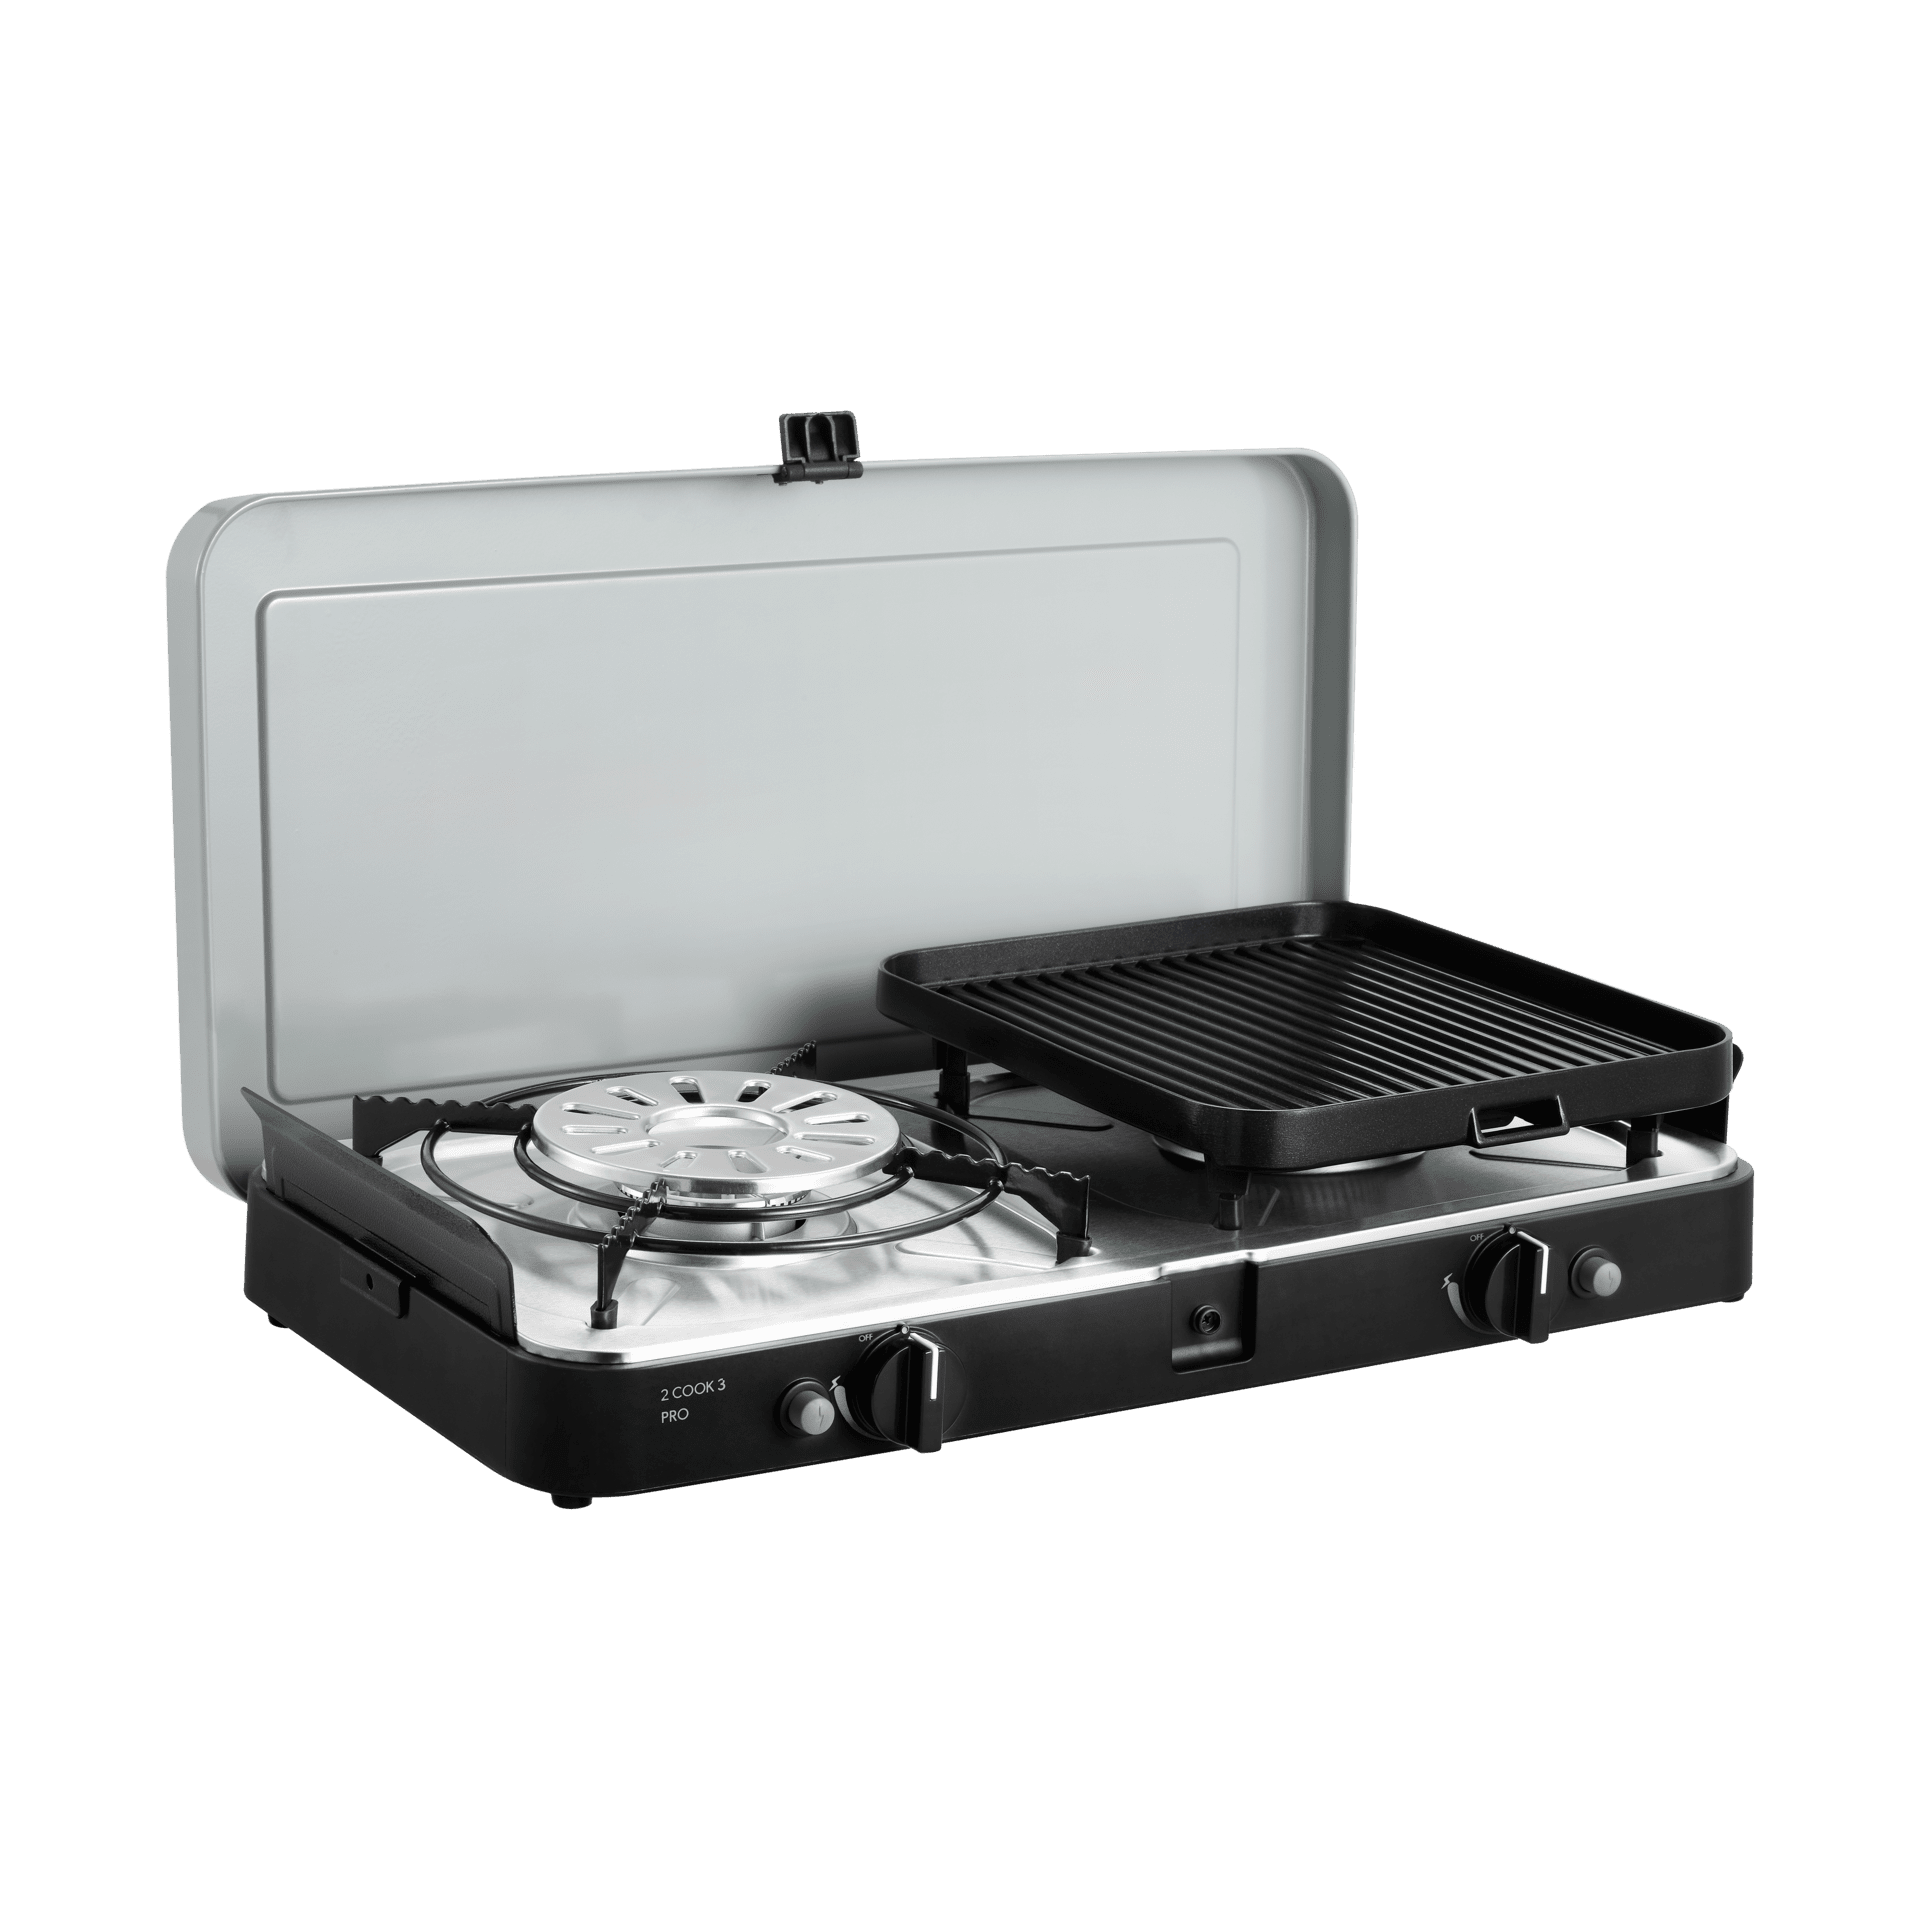 Dometic 9600001414 CF-110 Portable Fridge/Freezer - 112 Quart